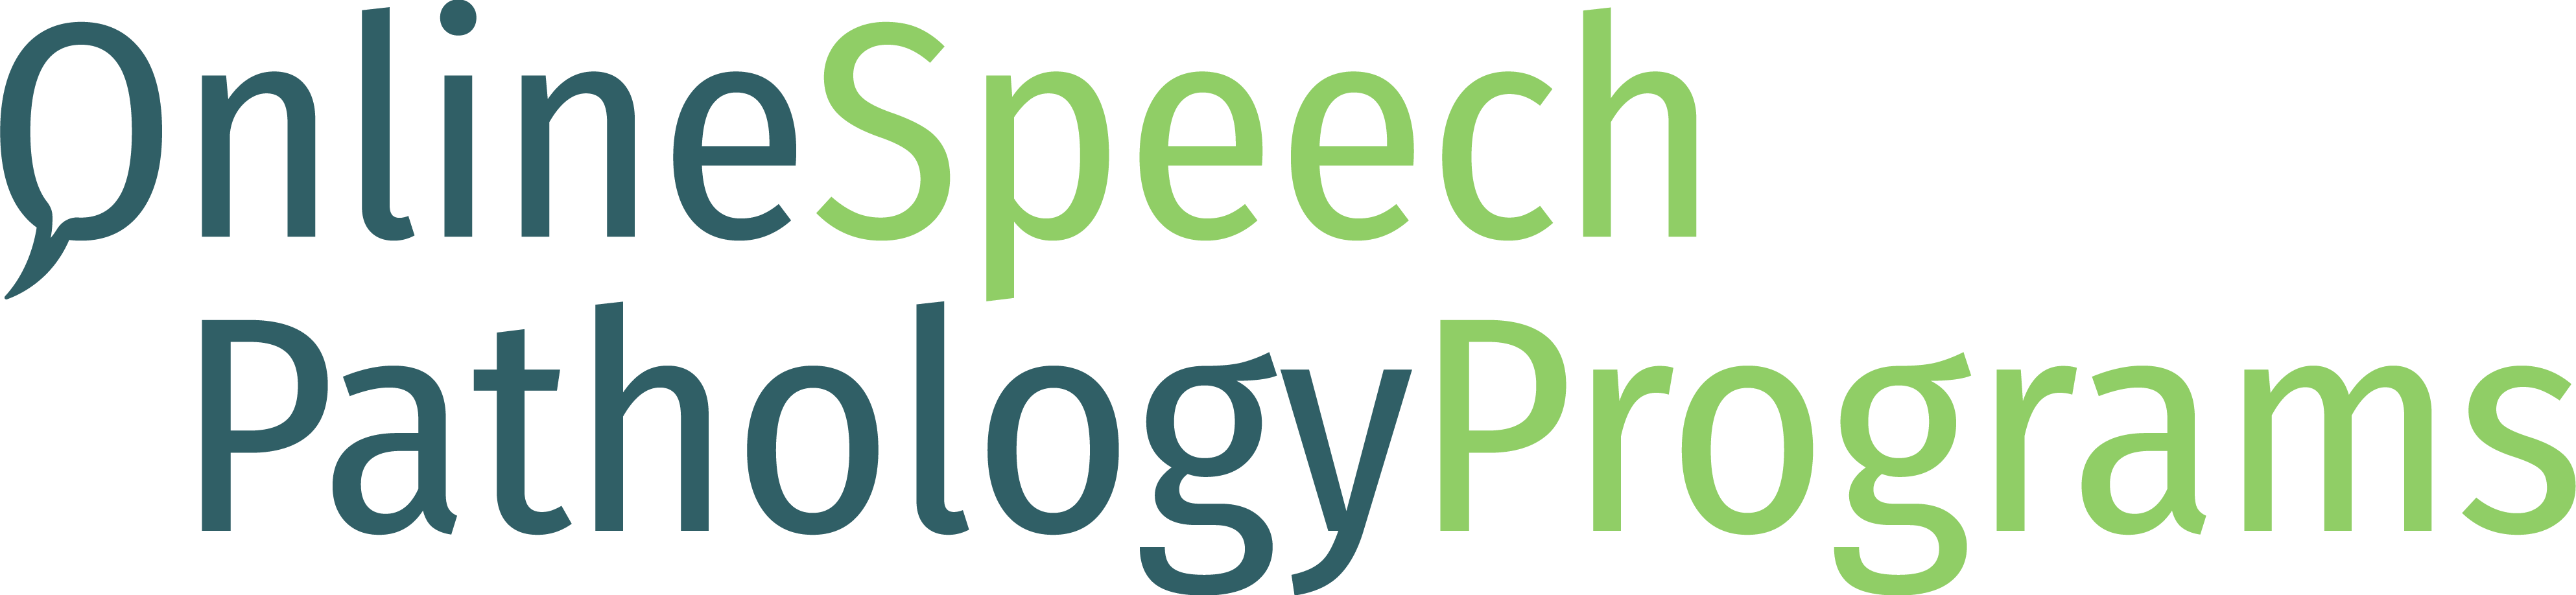 Online Speech Pathology Programs